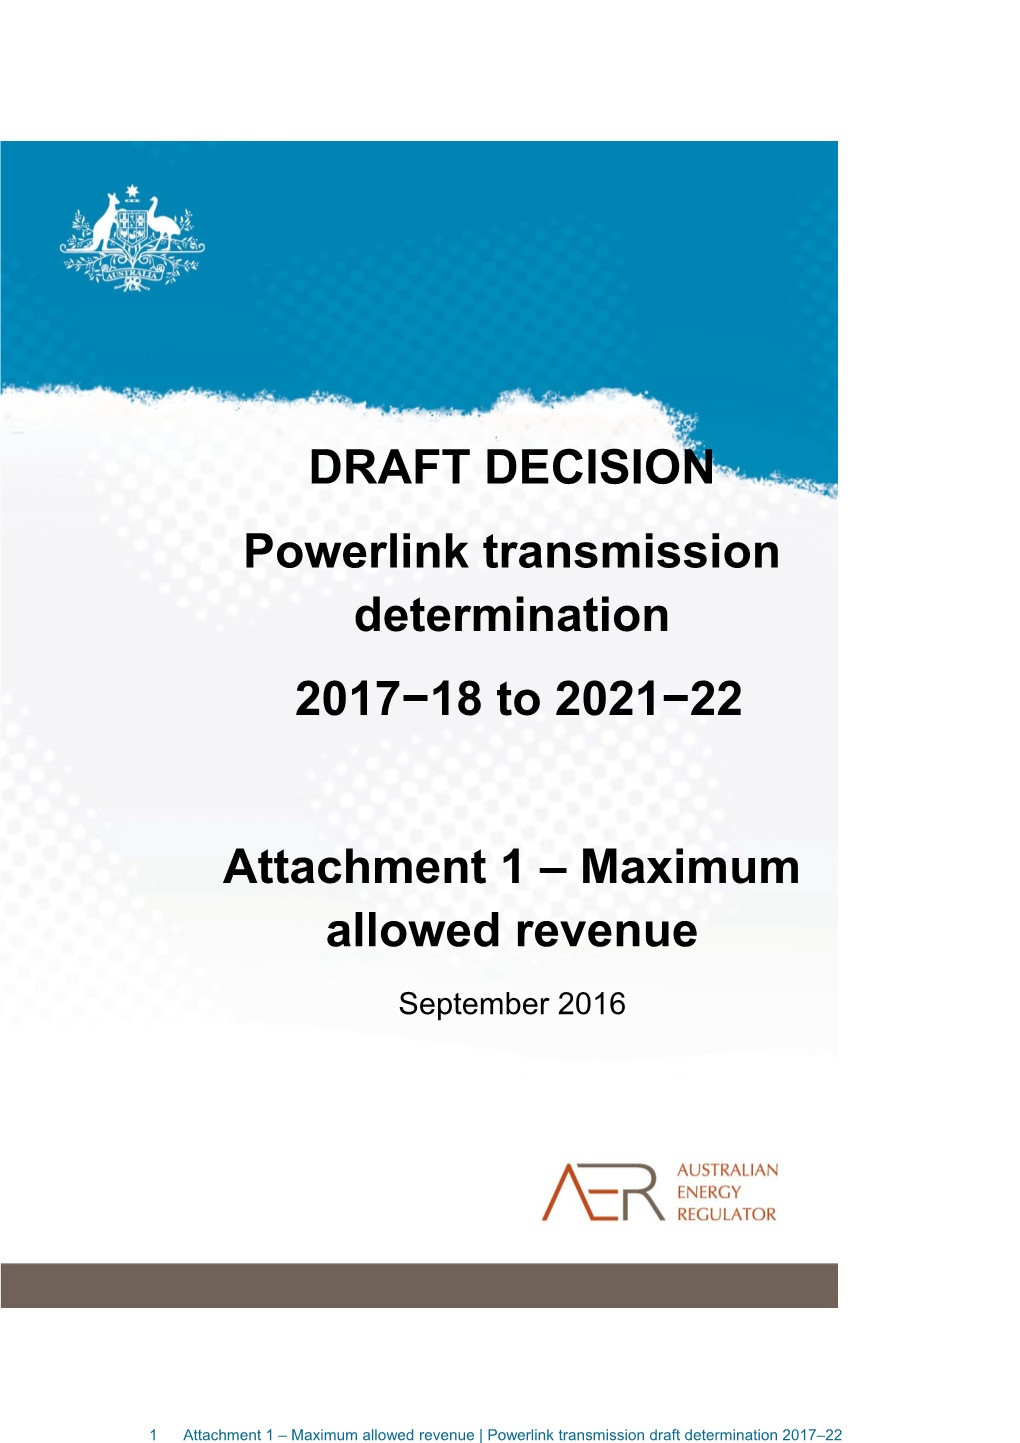 AER Draft Decision - Powerlink - Attachment 1 - Maximum Allowed Revenue